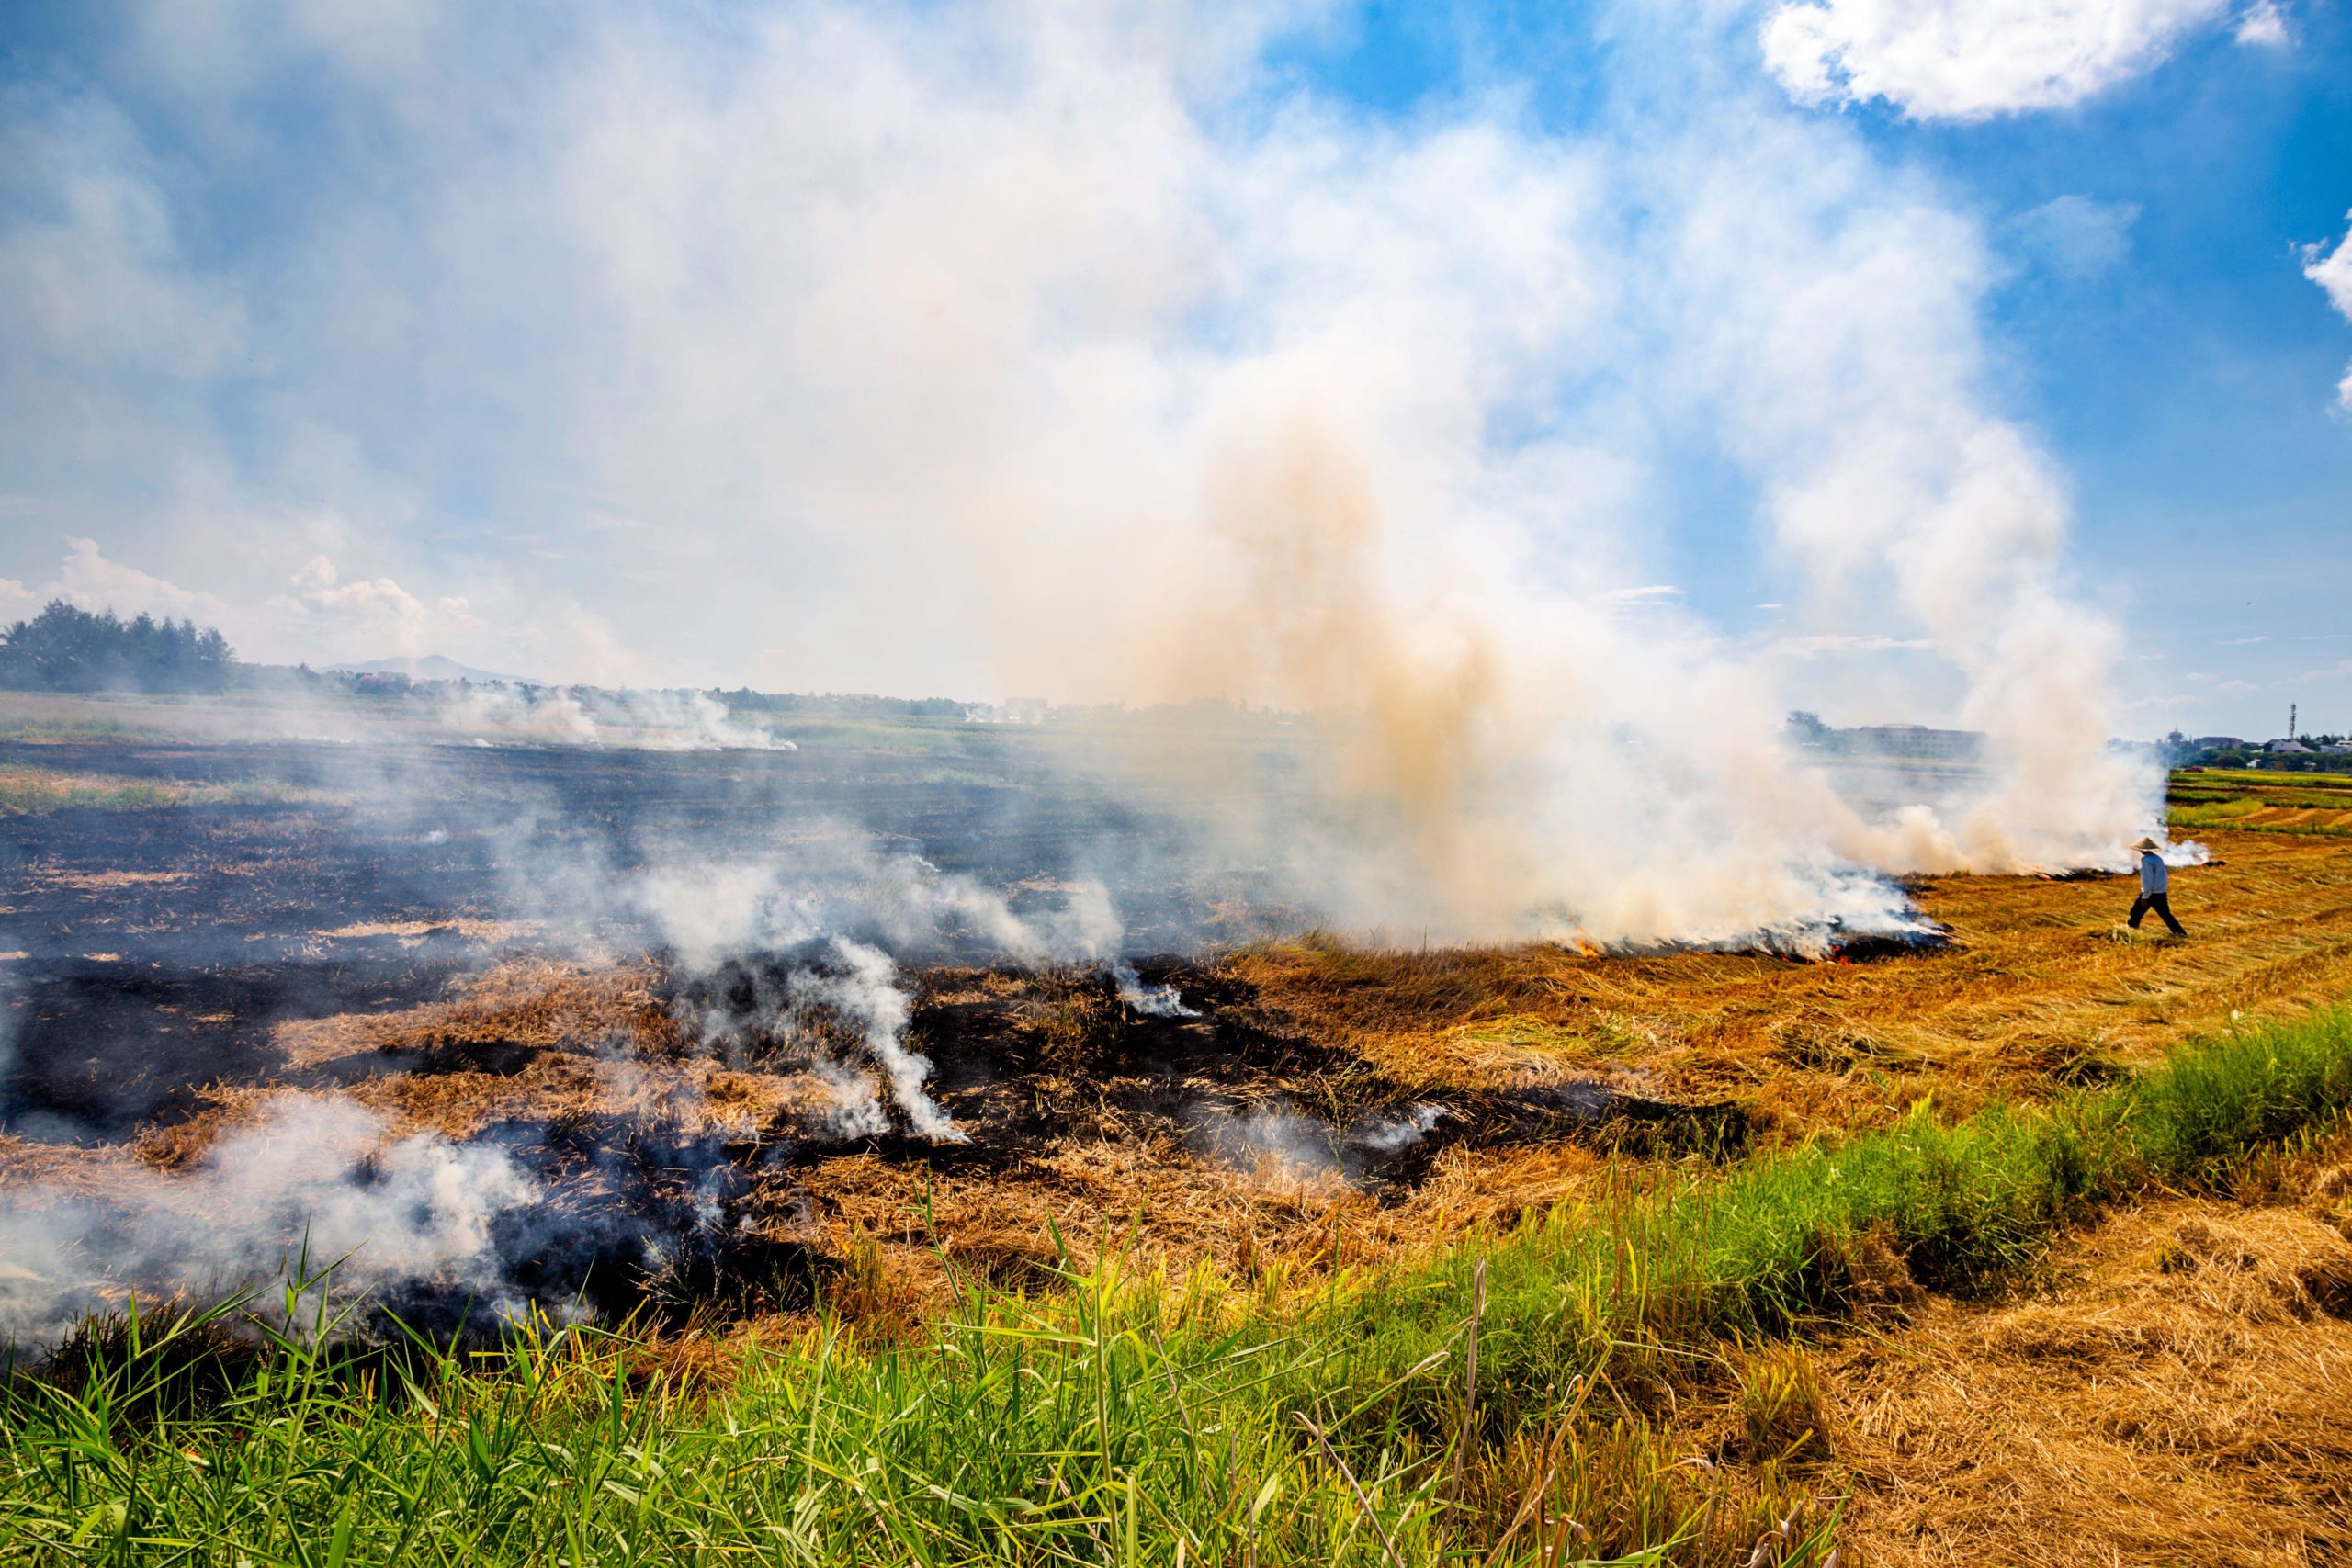 crops being burned in field